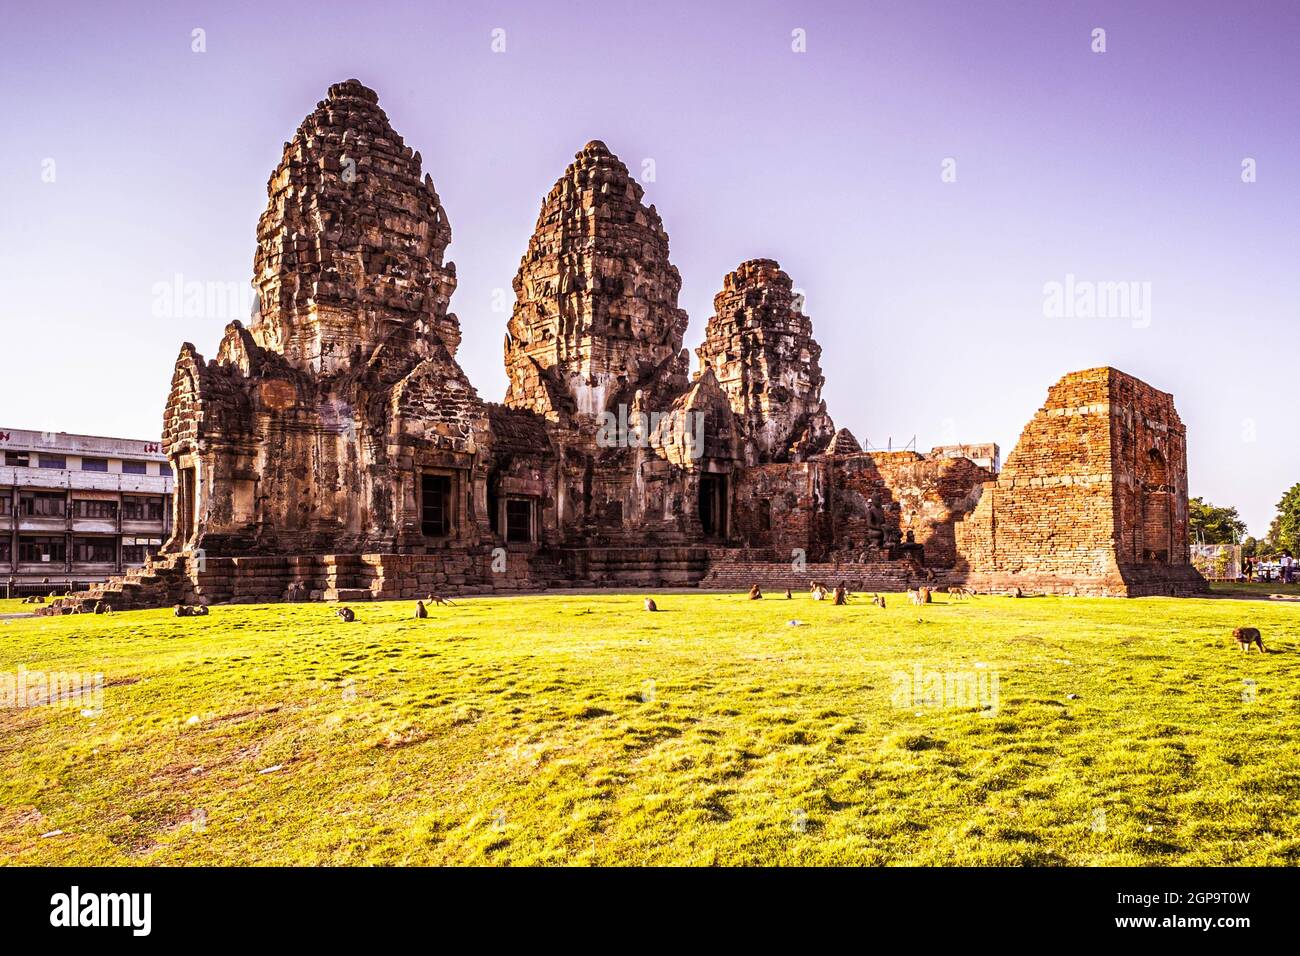 Lopburi Affentempel in Thailand. Phra Prang Sam Yot Tempel mit Affen, alte Architektur in Lopburi, Thailand. Stockfoto